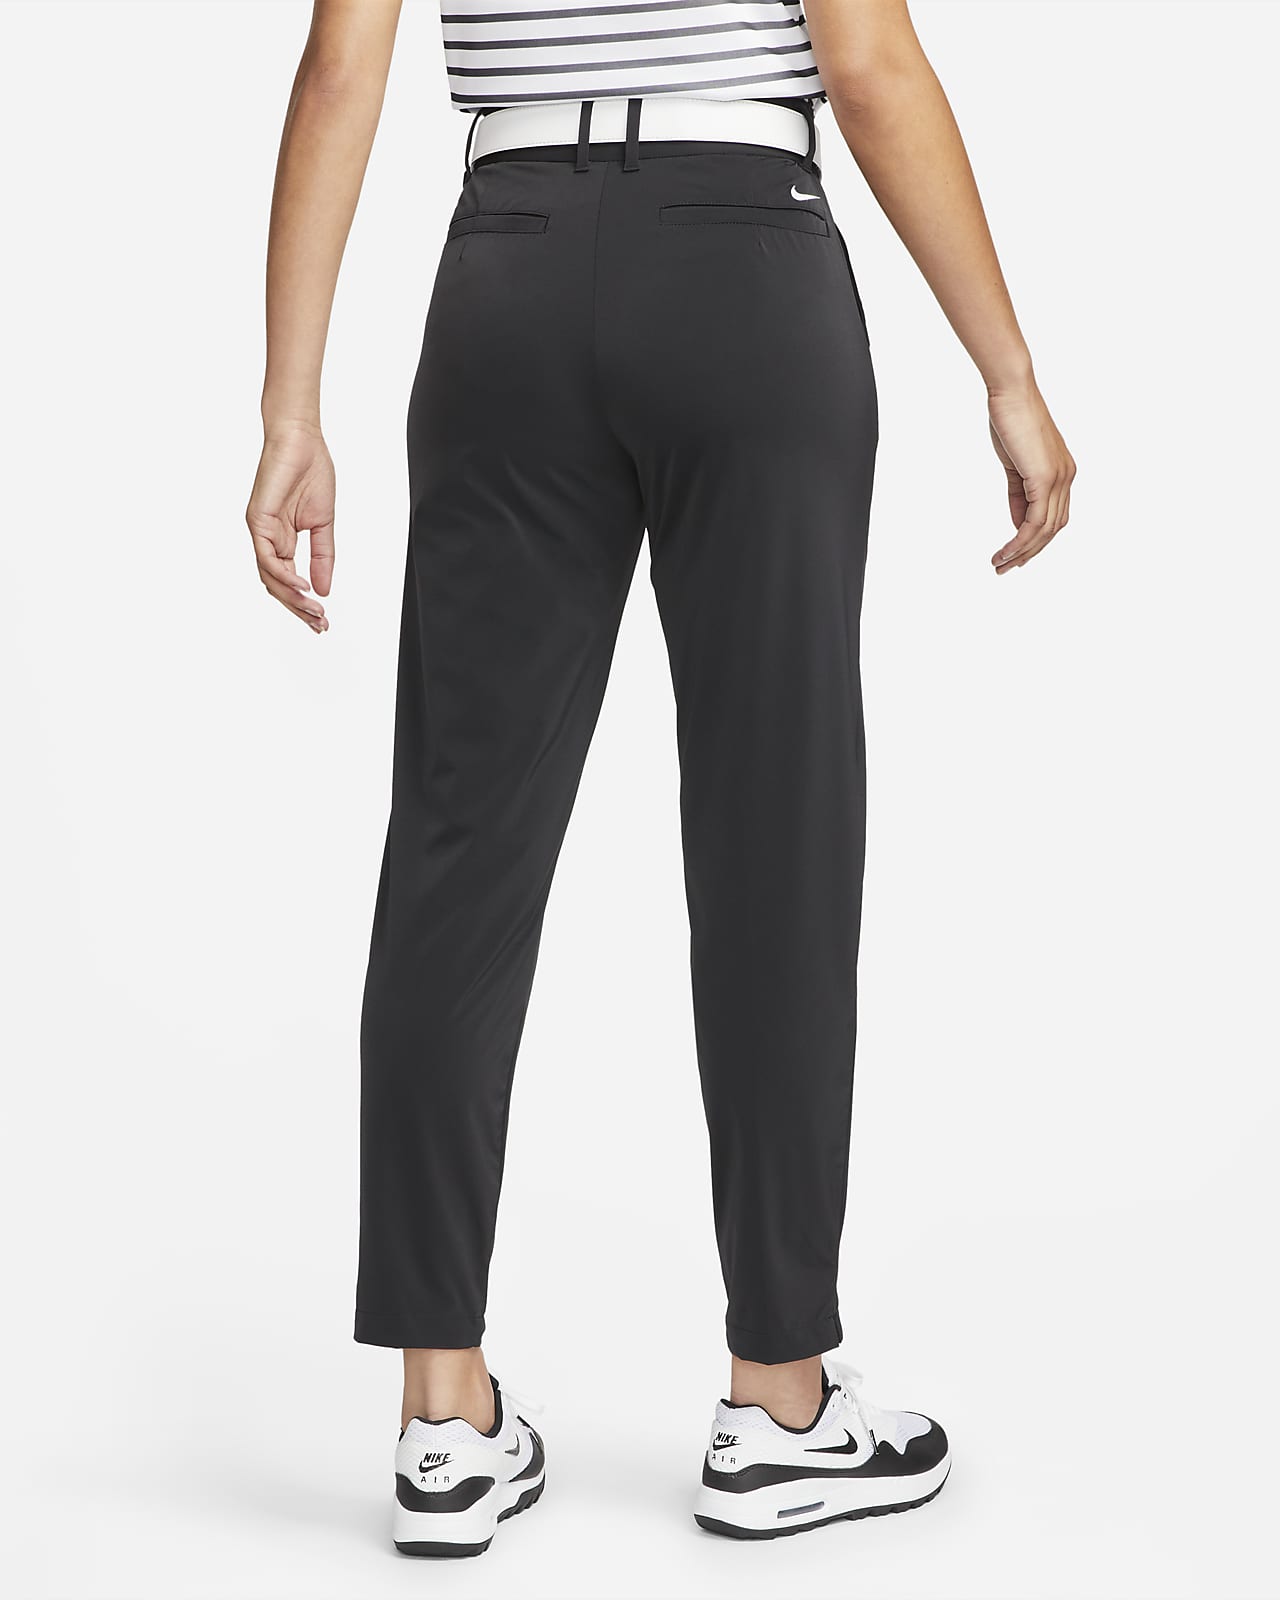 Nike Dri-Fit Stretch Lola Ladies Flat Front Golf Pants - SIZE 10